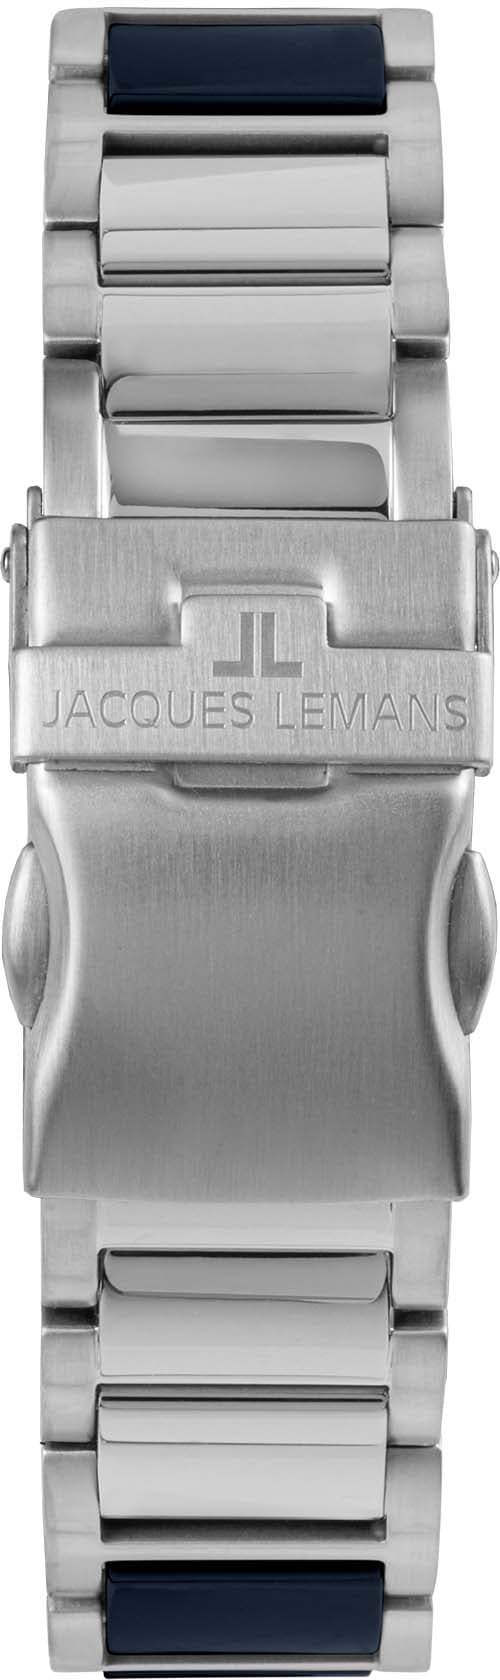 »Liverpool, Keramikuhr Jacques I\'m walking im Lemans 42-10B« | Onlineshop